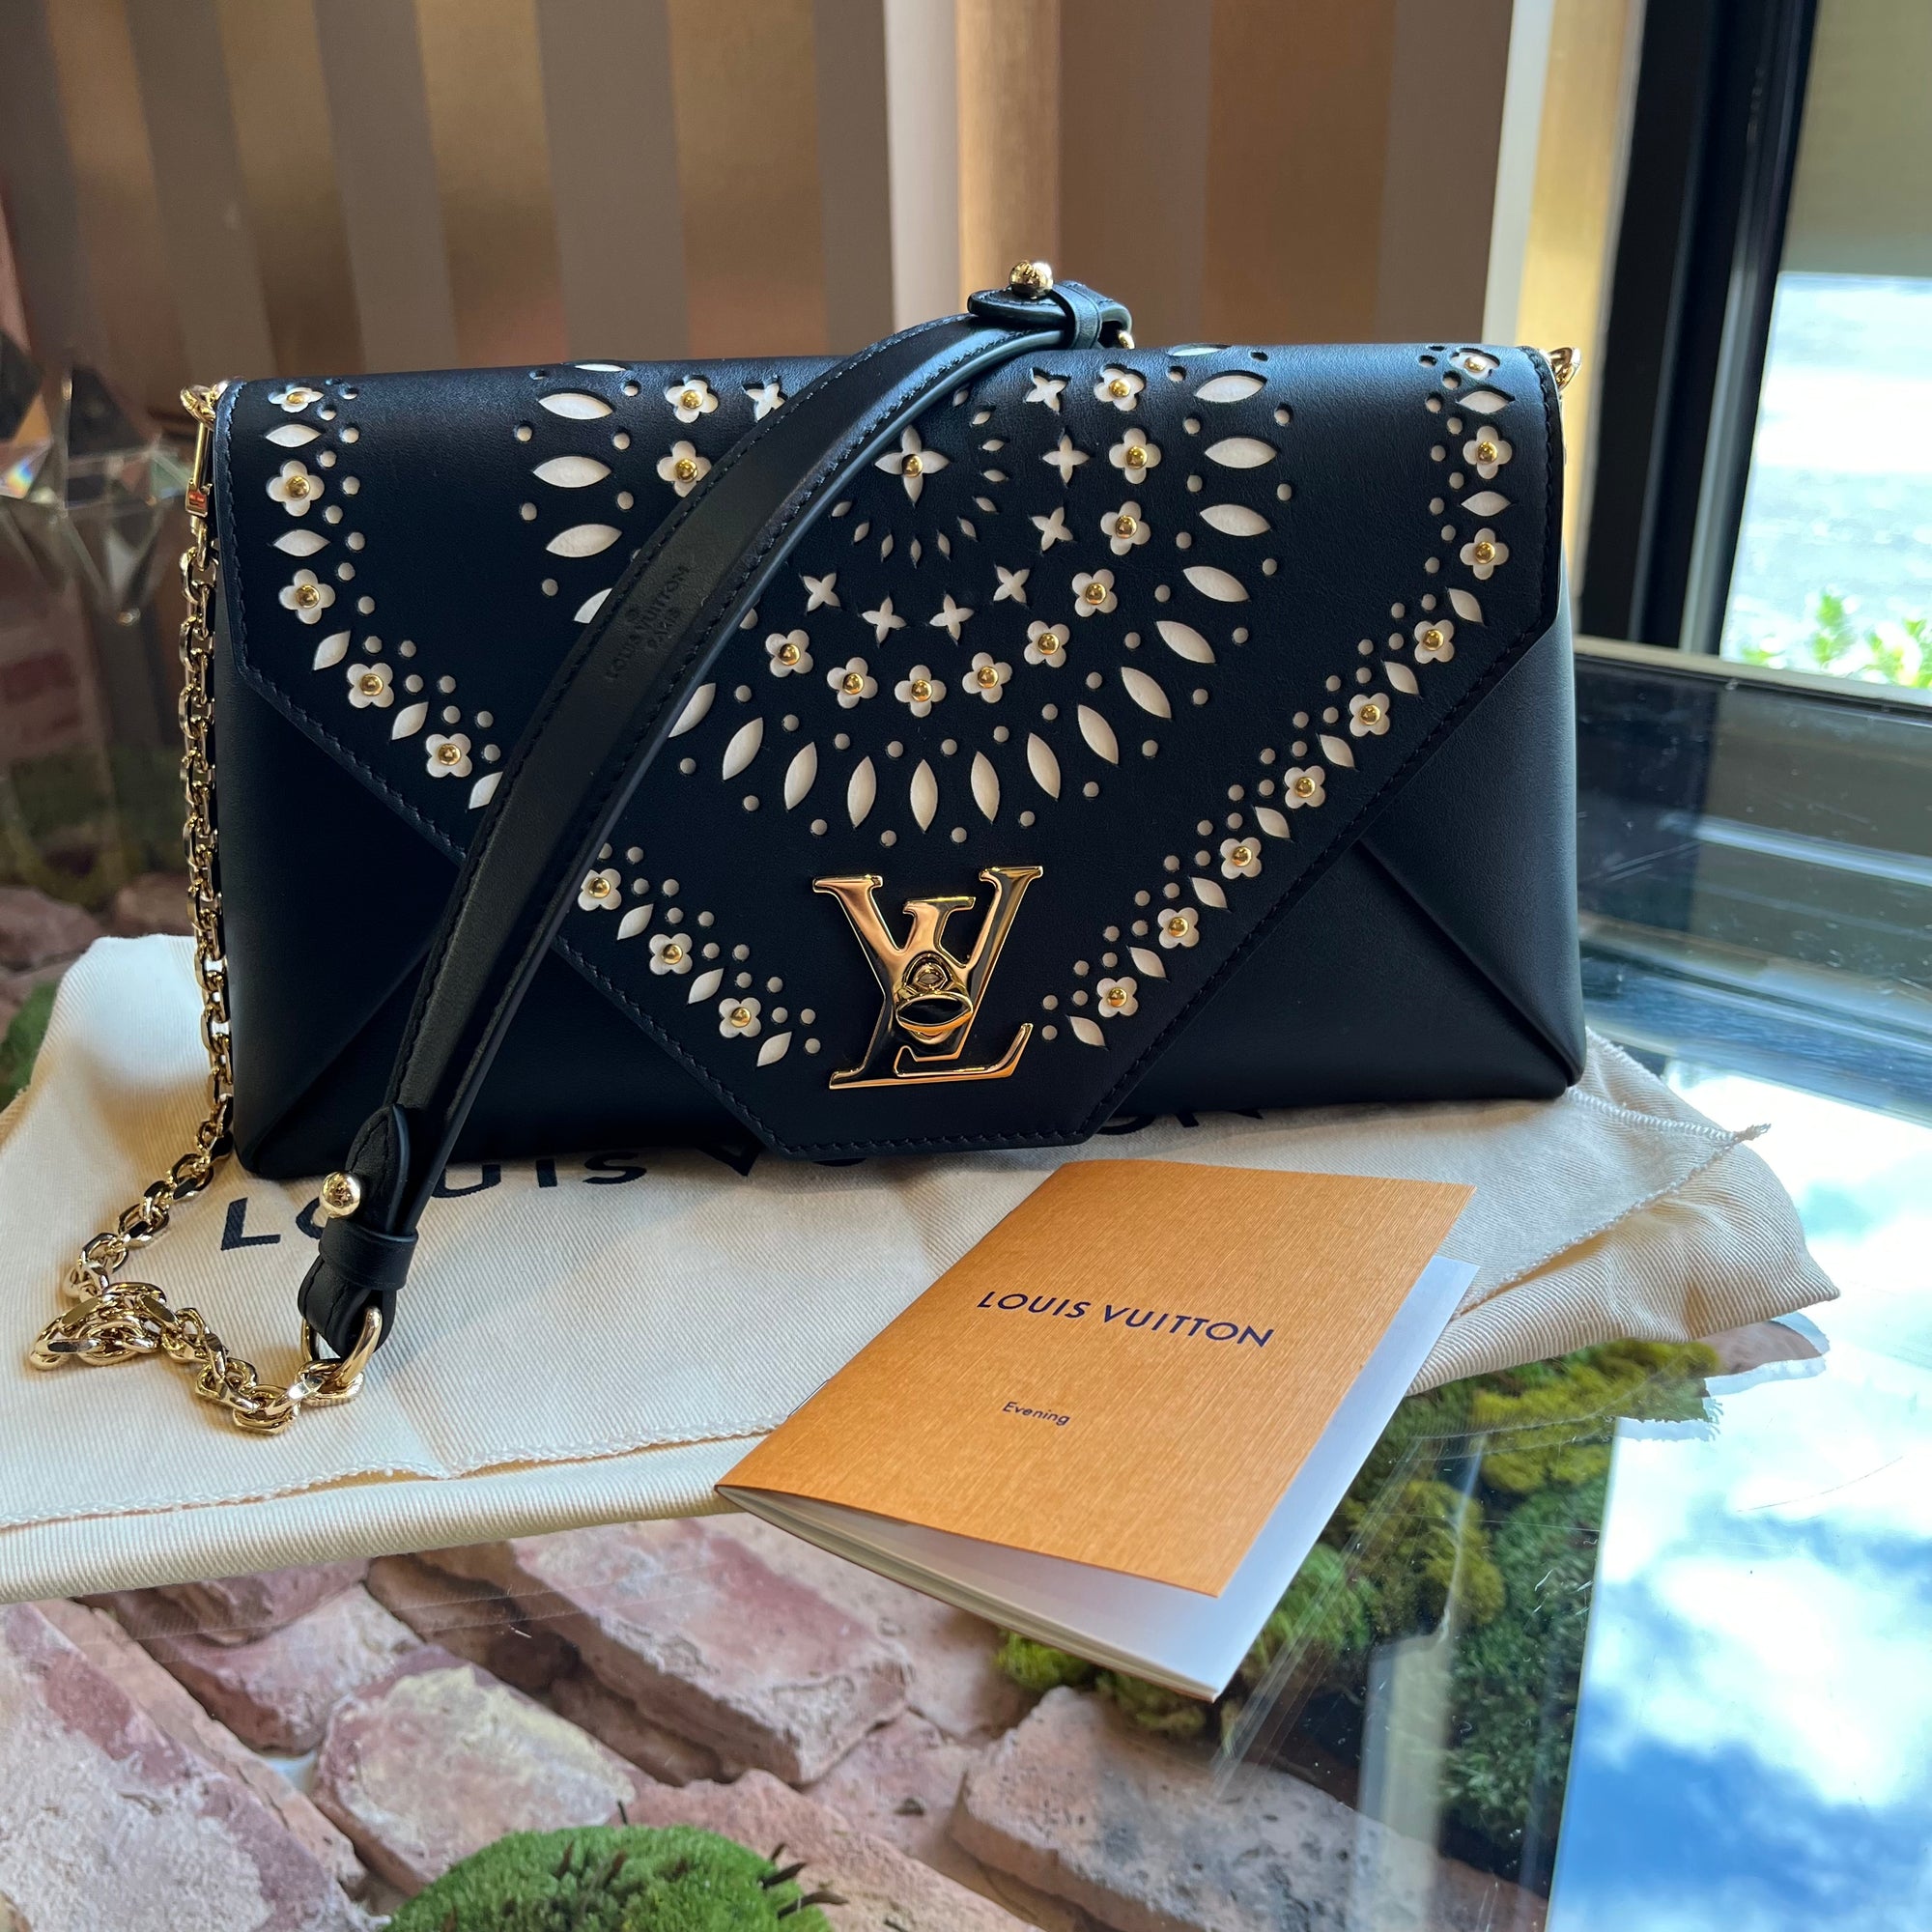 Original Louis Vuitton Handbag 